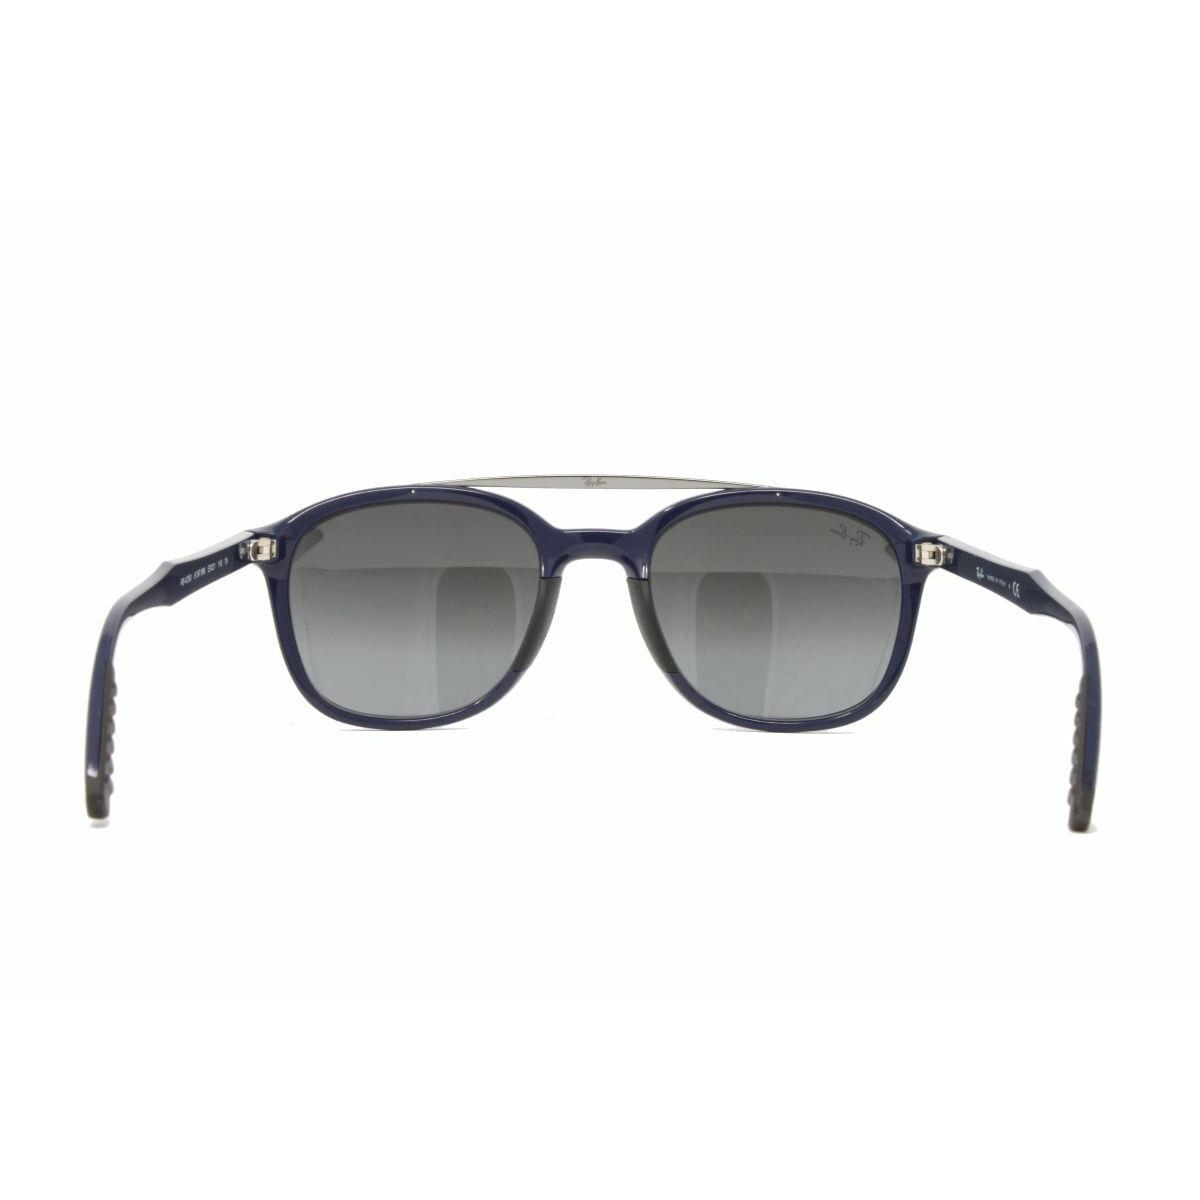 Ray-Ban sunglasses  - Gray Frame, Gray Lens 3